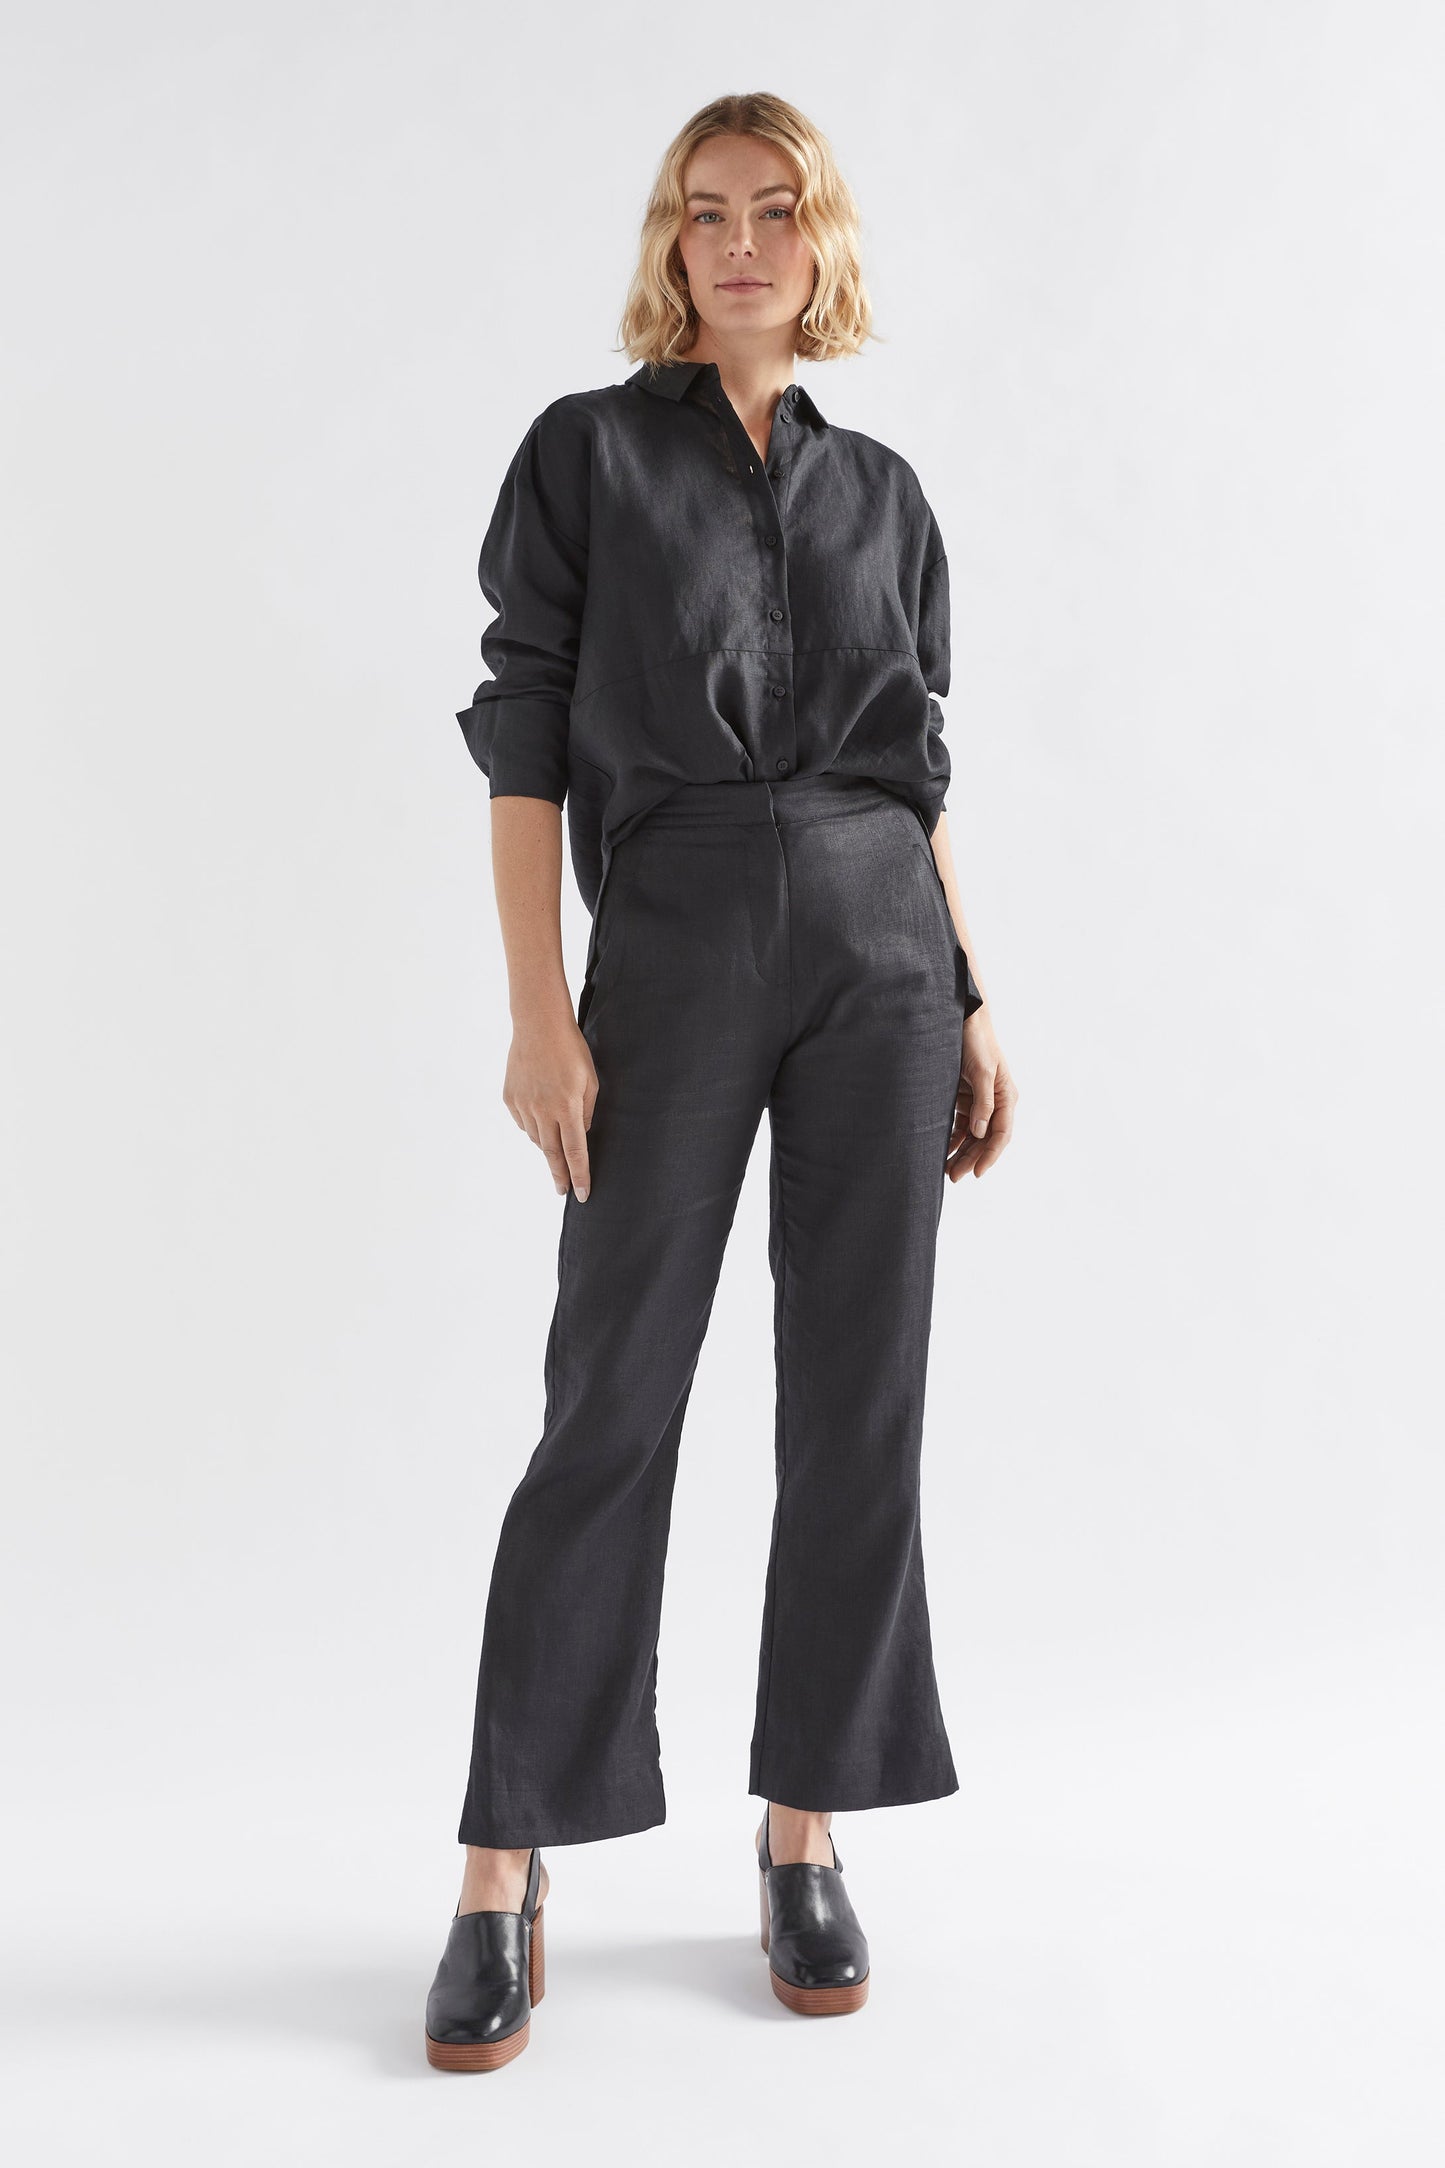 Stilla Linen Shirt with High-Low Hem and Back Pleat Detail Model front full body 2 | BLACK